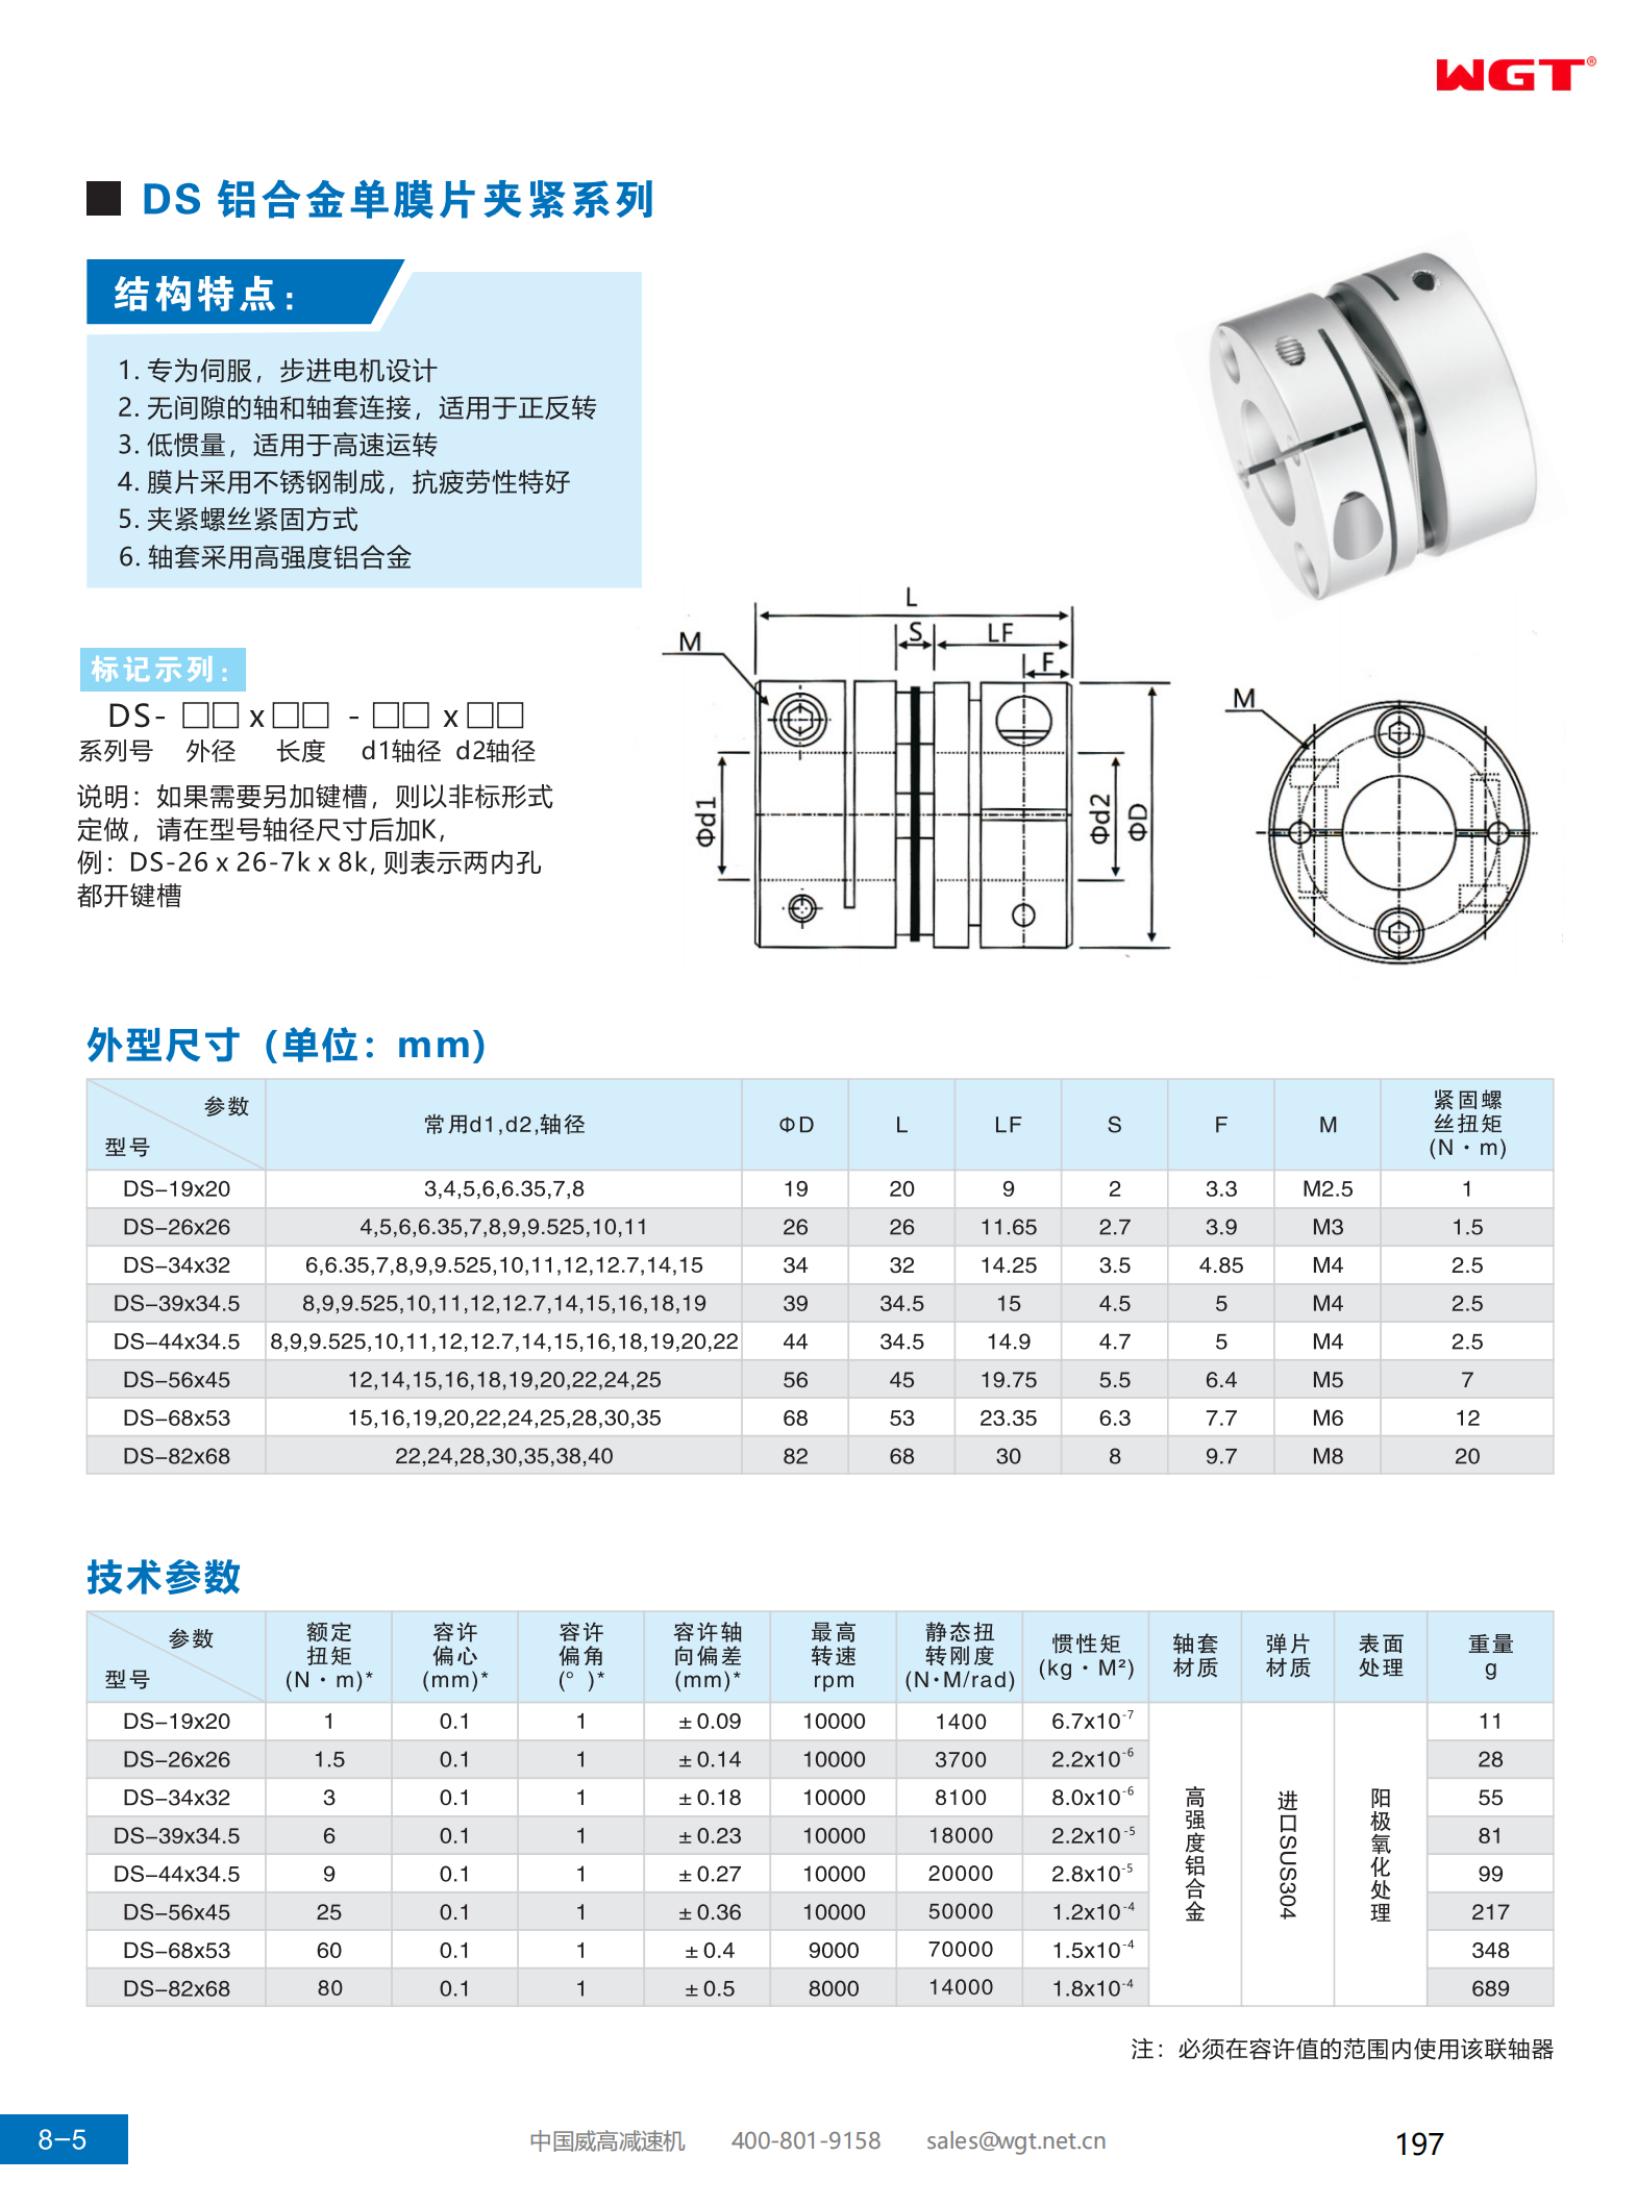 DS aluminum alloy single diaphragm clamping series